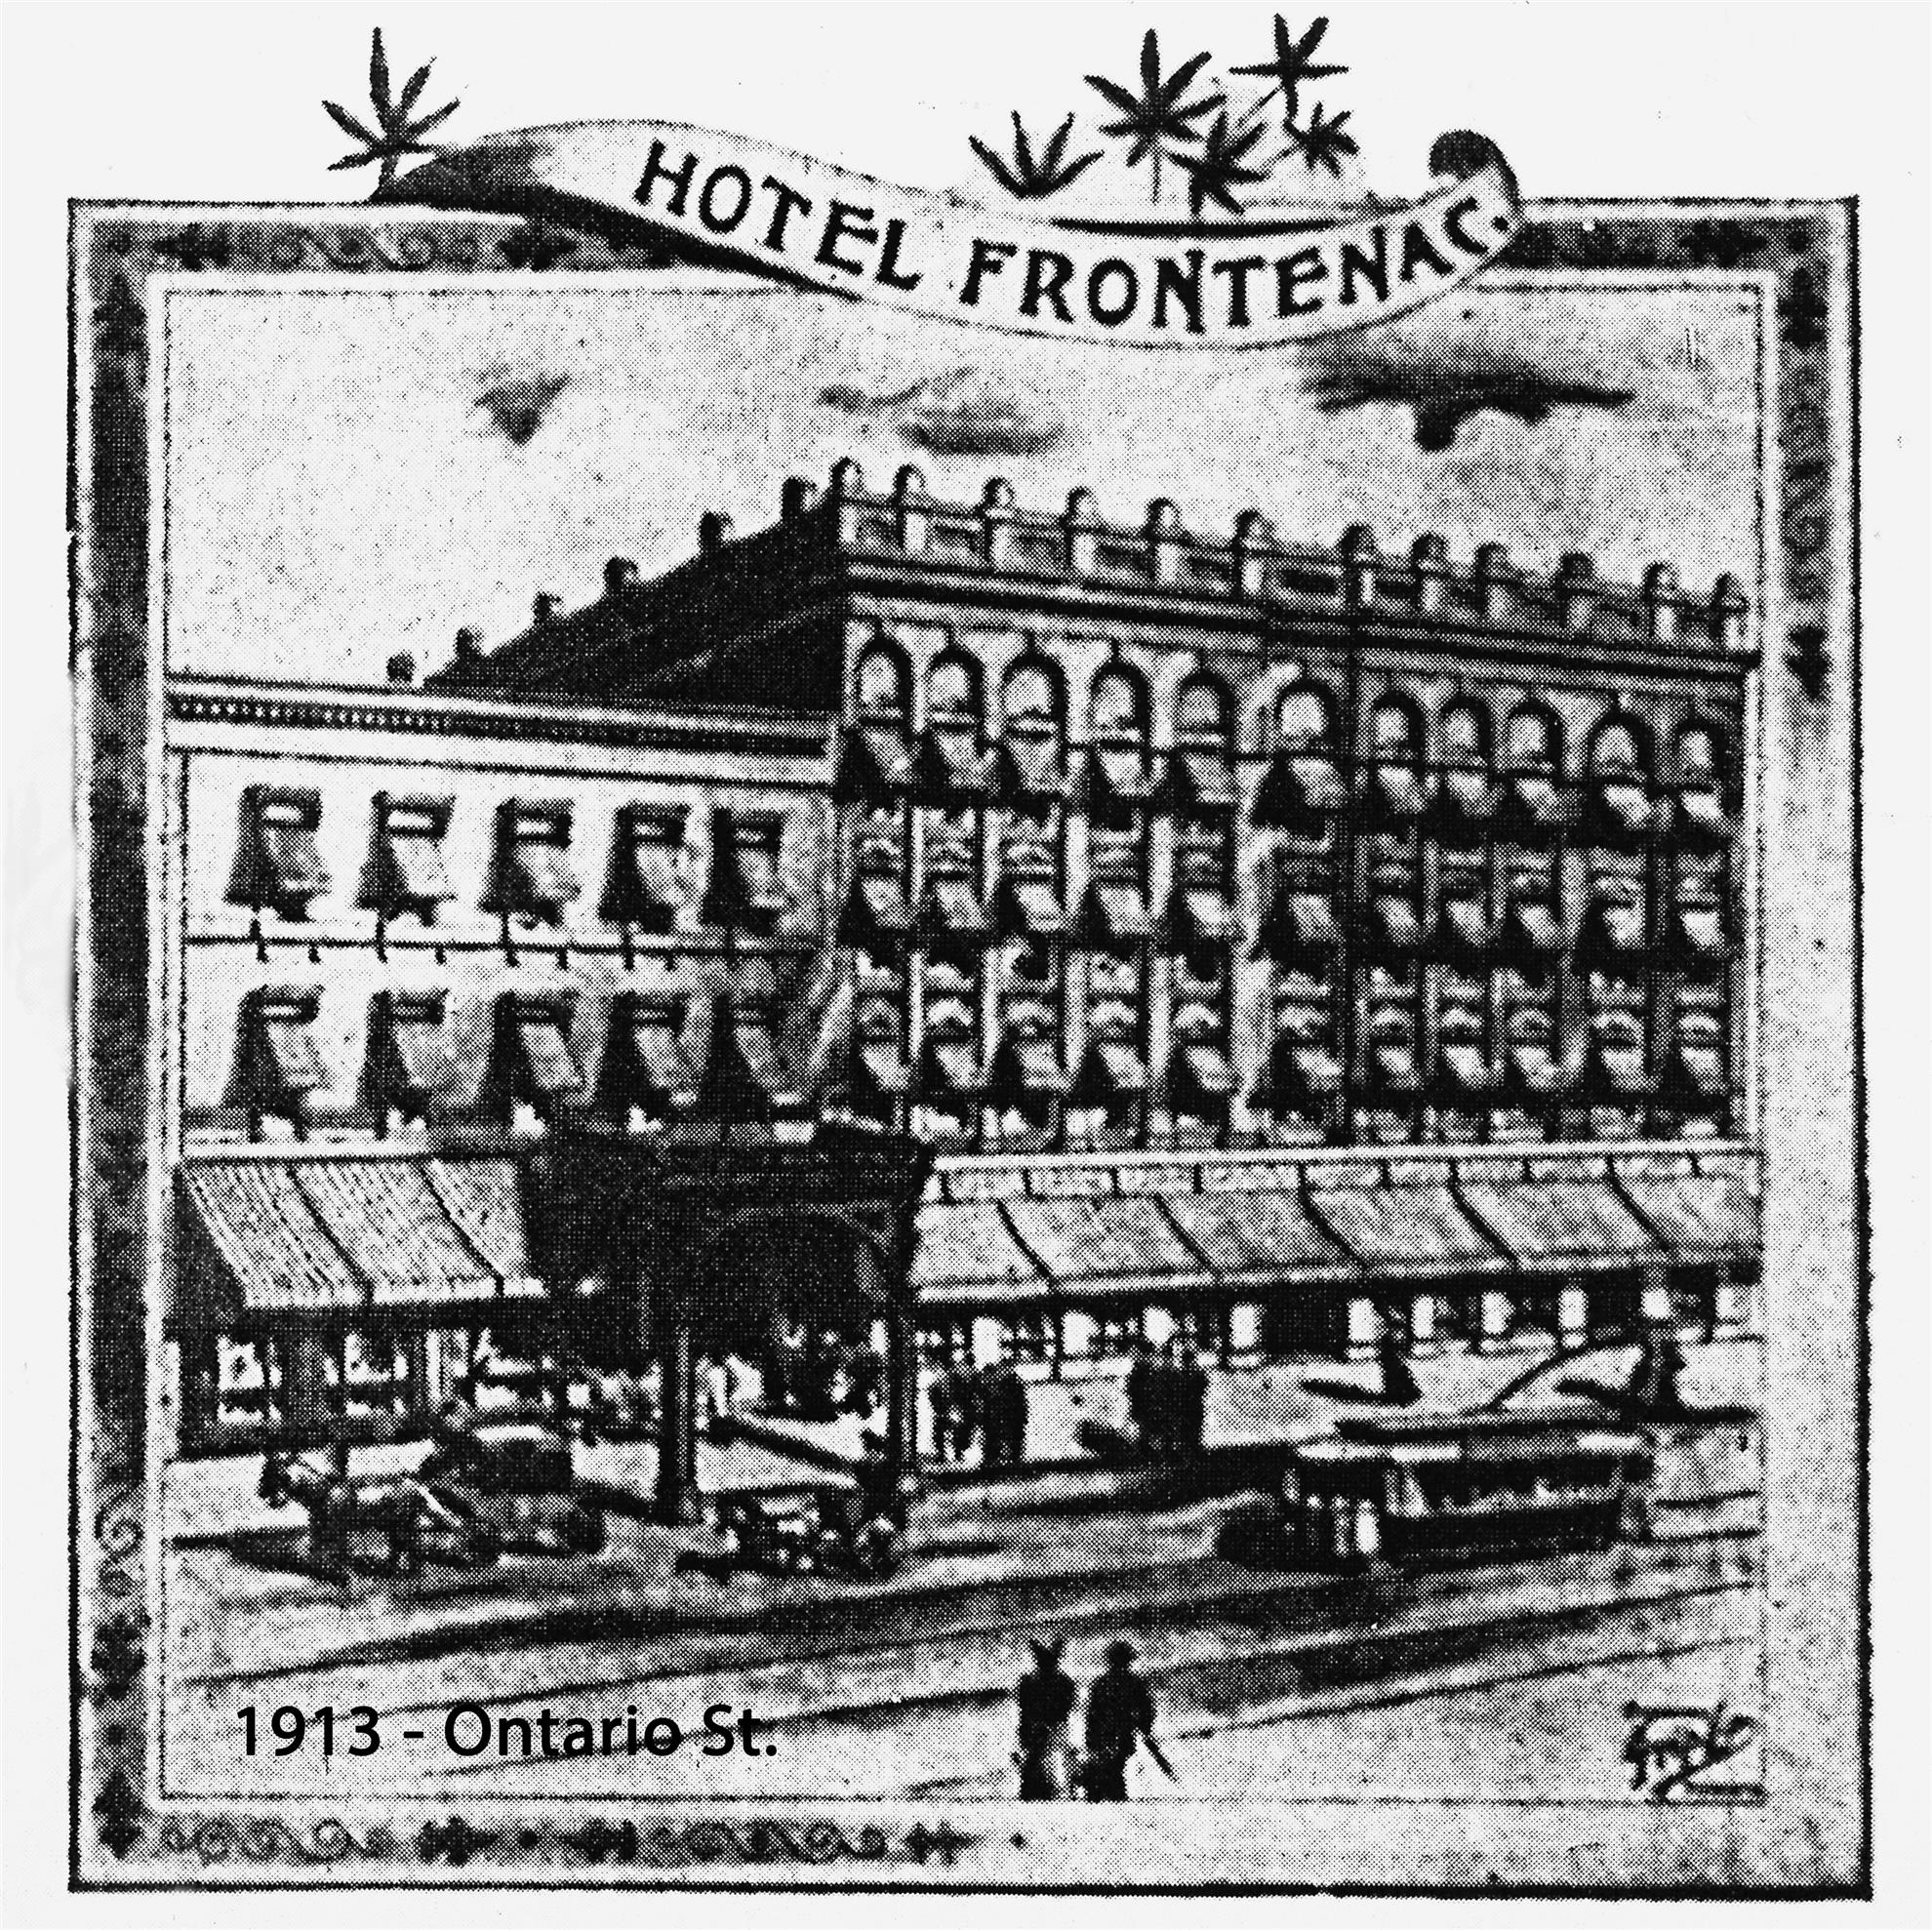 Hotel Frontenac 1913